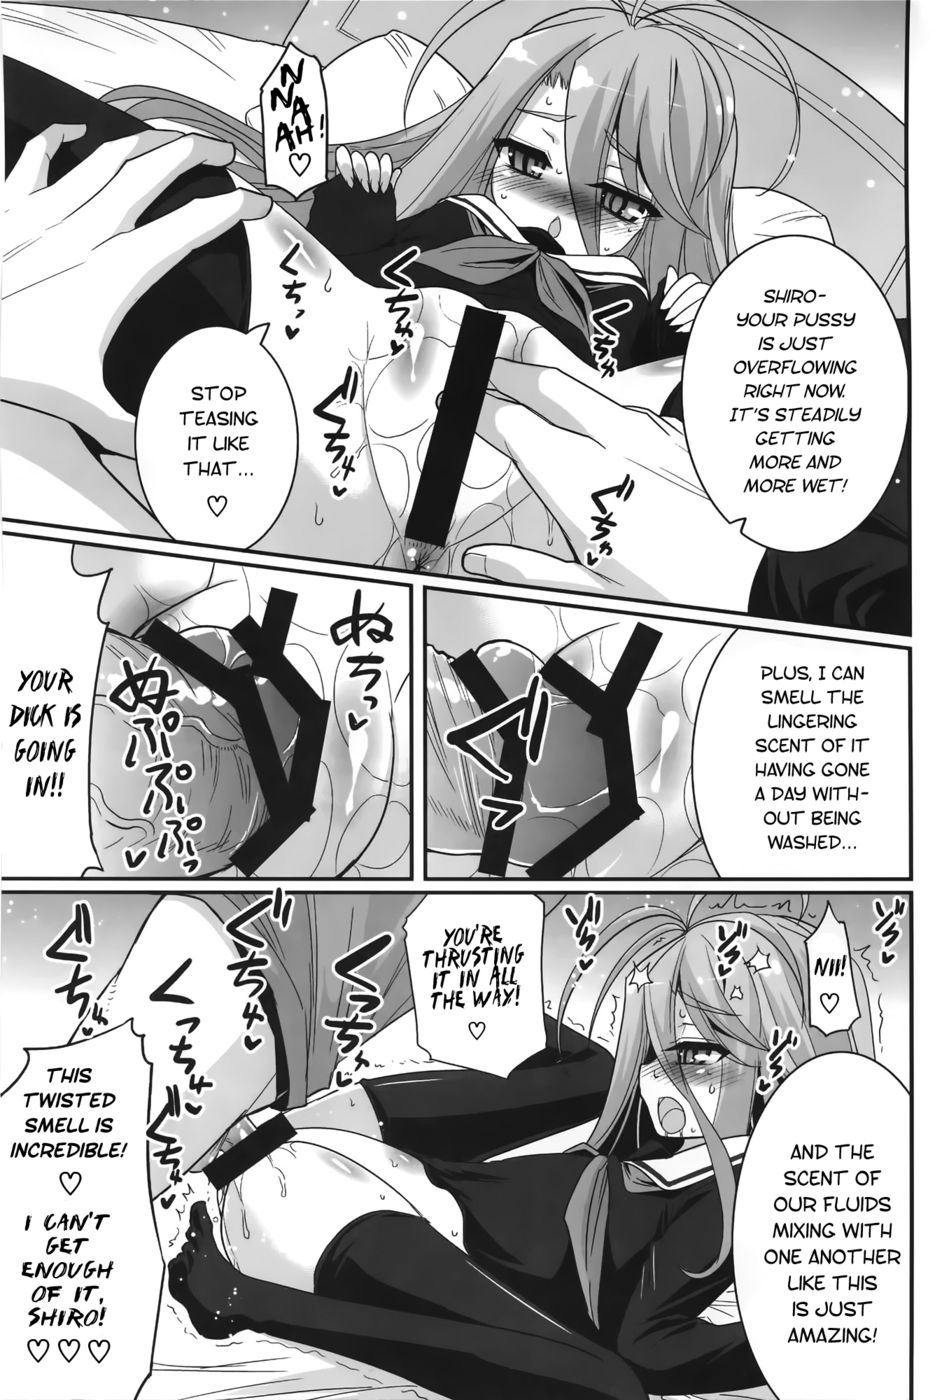 Hentai Manga Comic-Shiro's Nighttime Attack!-Read-17